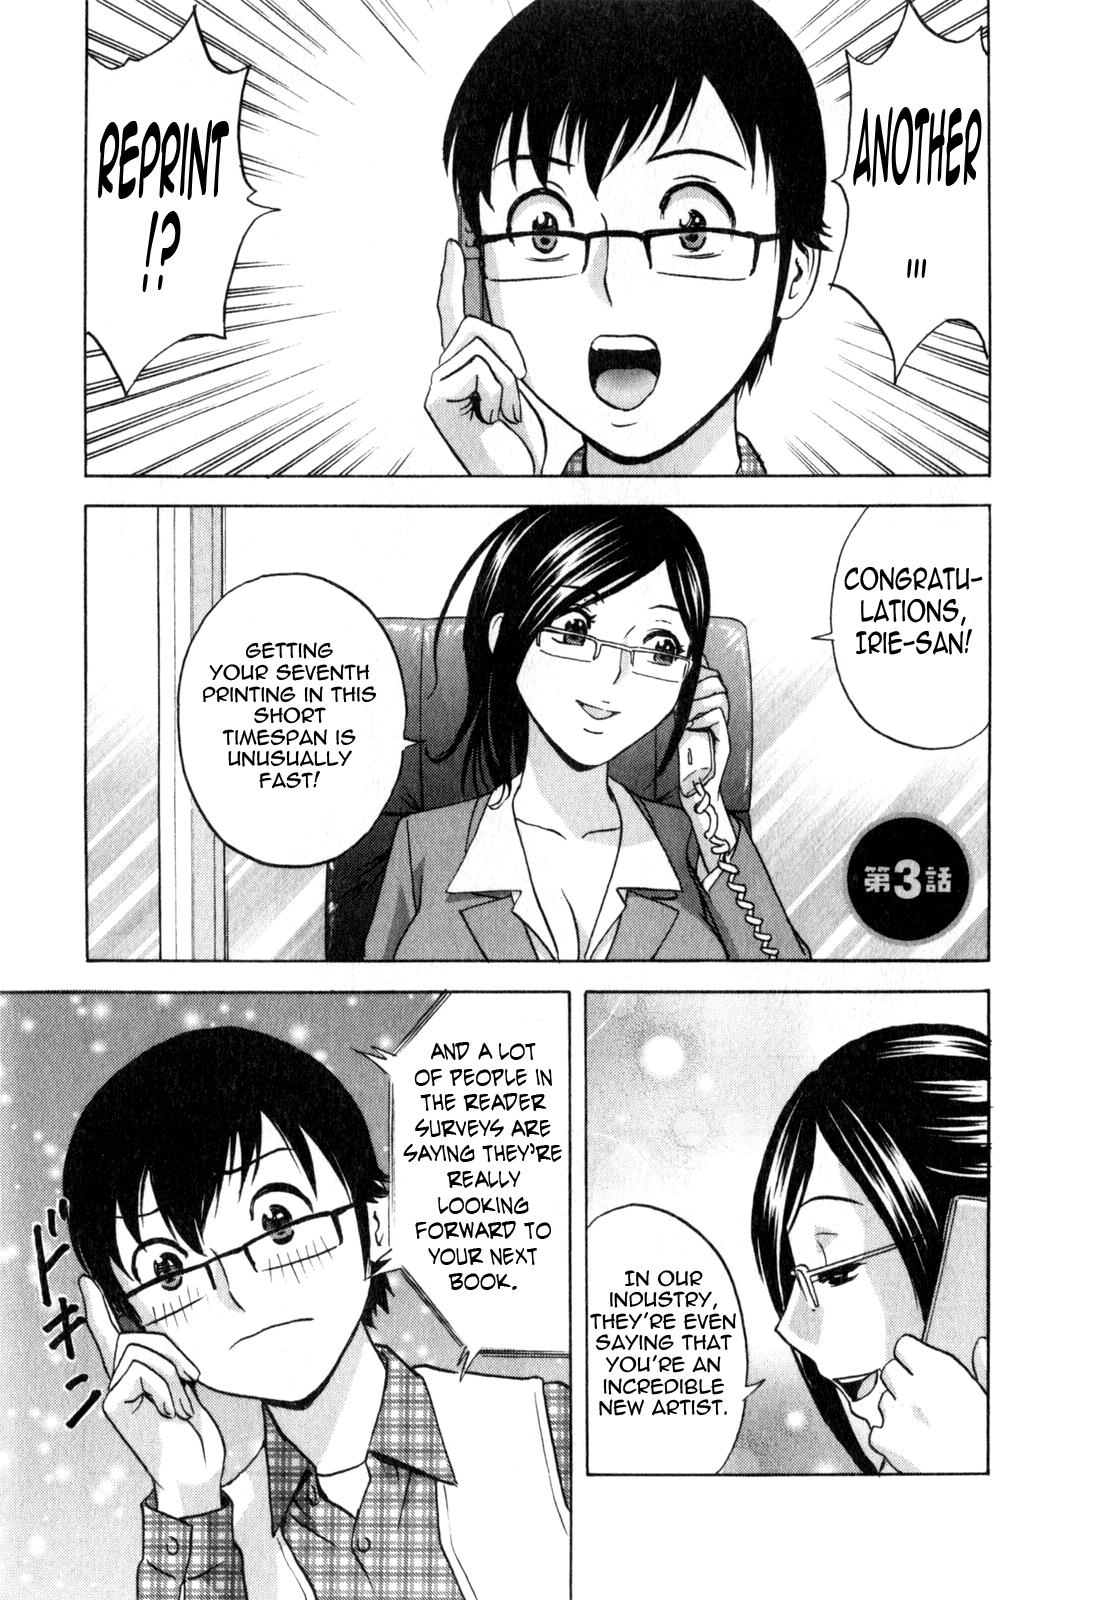 [Hidemaru] Life with Married Women Just Like a Manga 3 - Ch. 1-8 [English] {Tadanohito} 46